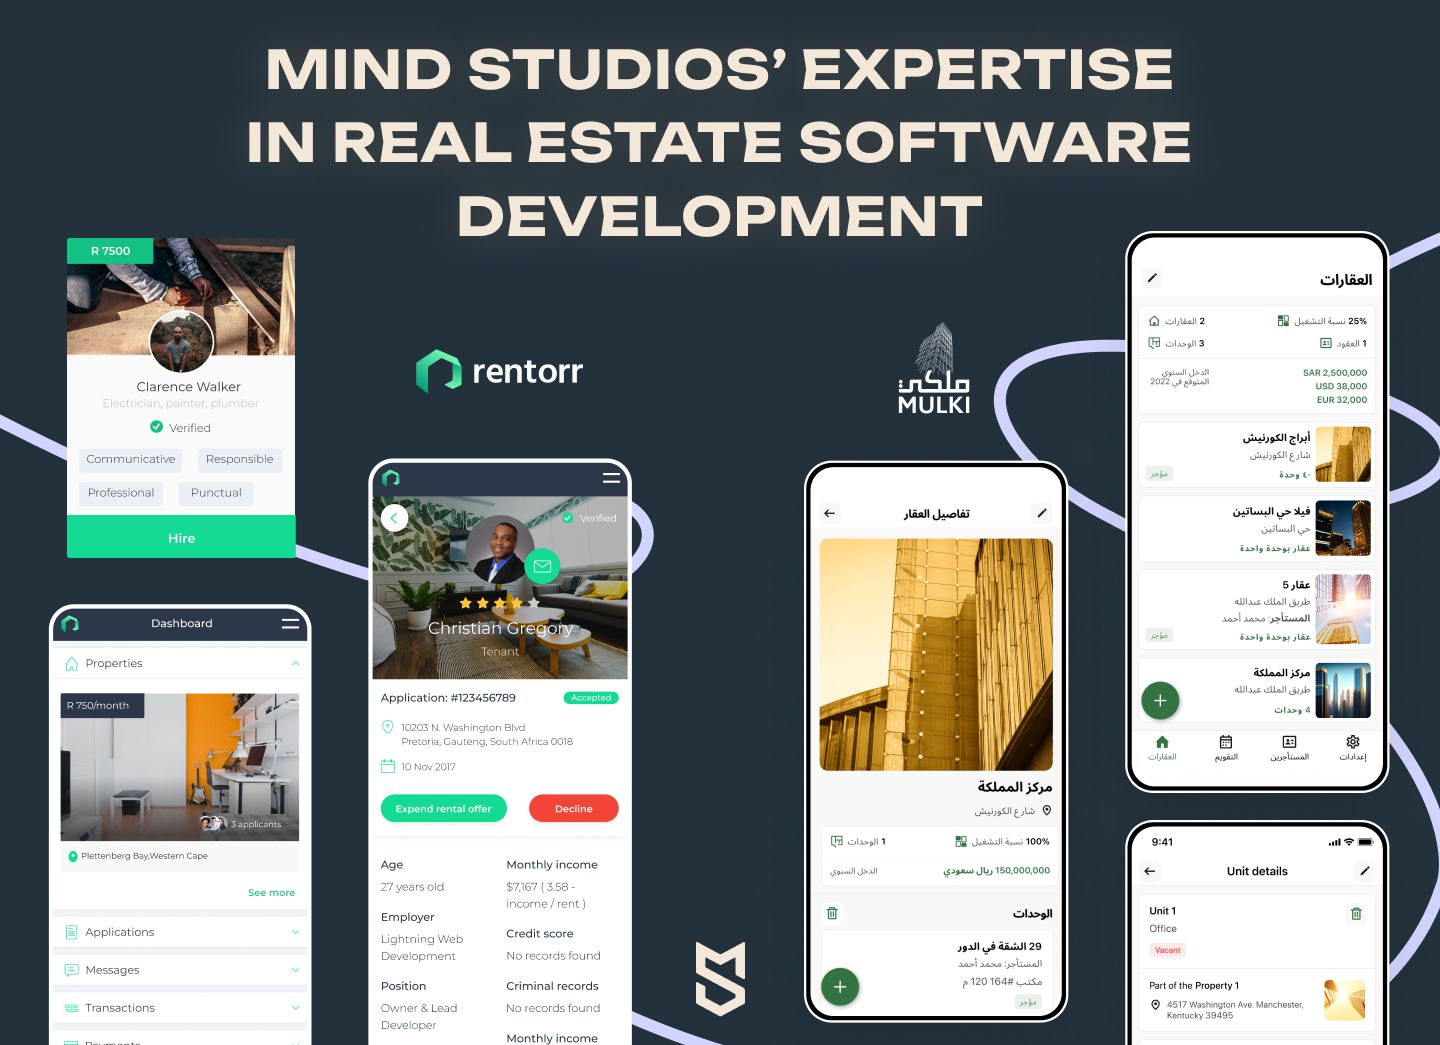 Mind Studios’ expertise in real estate software development